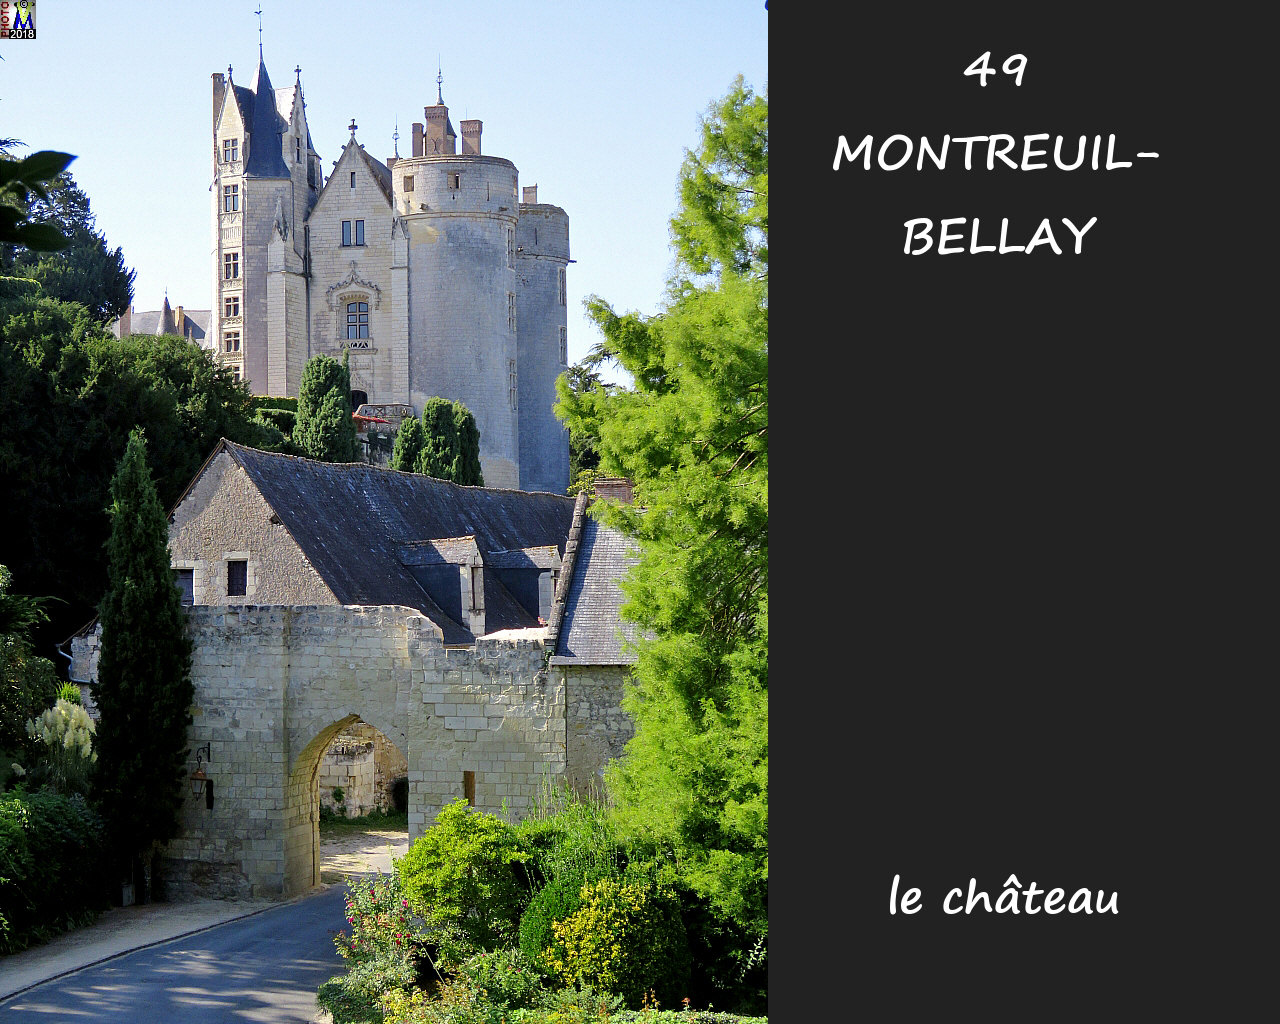 49MONTREUIL-BELLAY_chateau_1010.jpg